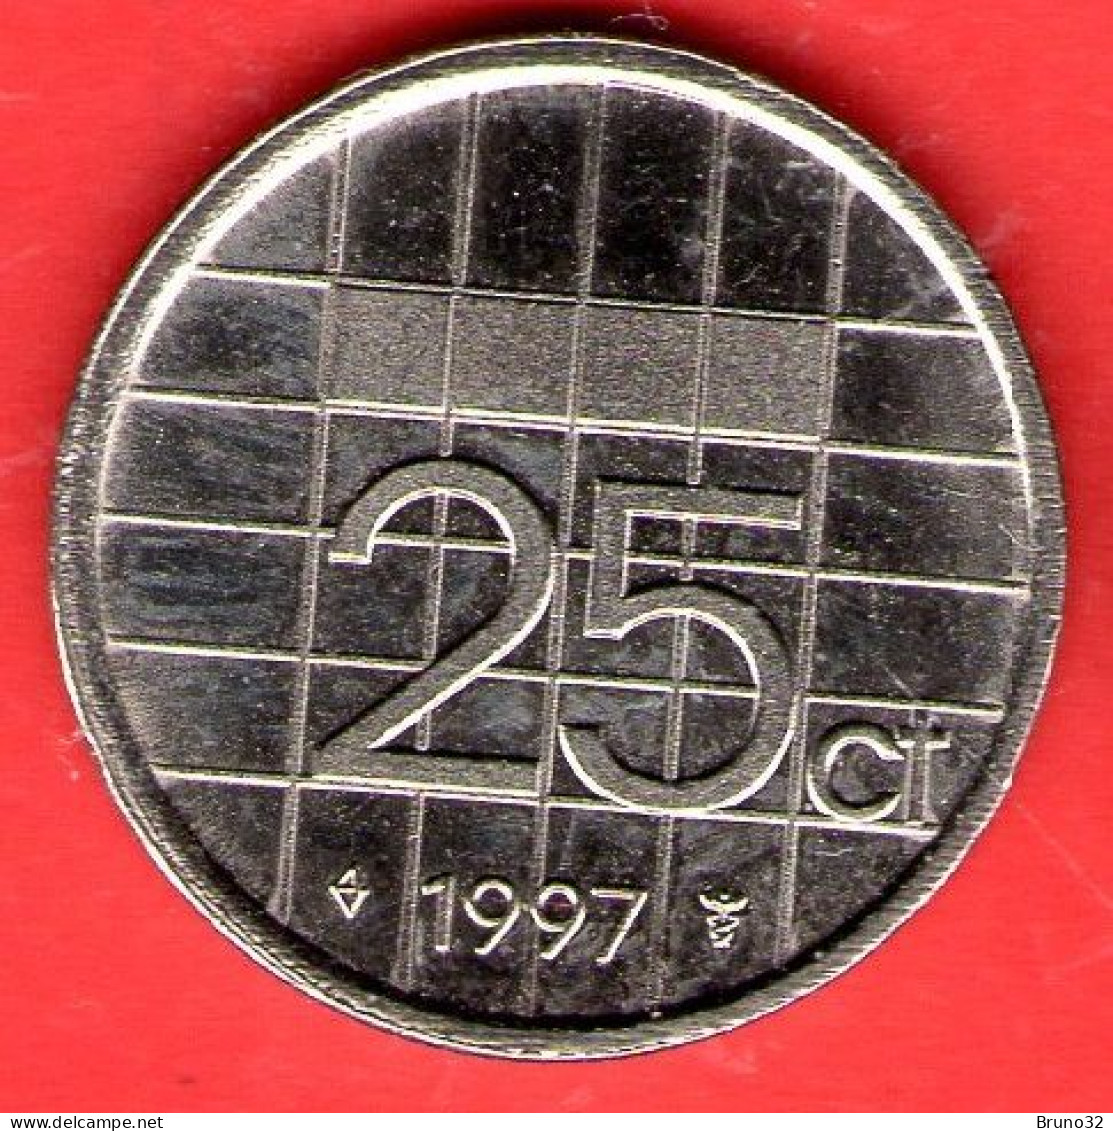 Paesi Bassi - Nederland - Pays Bas - 1997 - 25 Cents - QFDC/aUNC - Come Da Foto - 1980-2001 : Beatrix